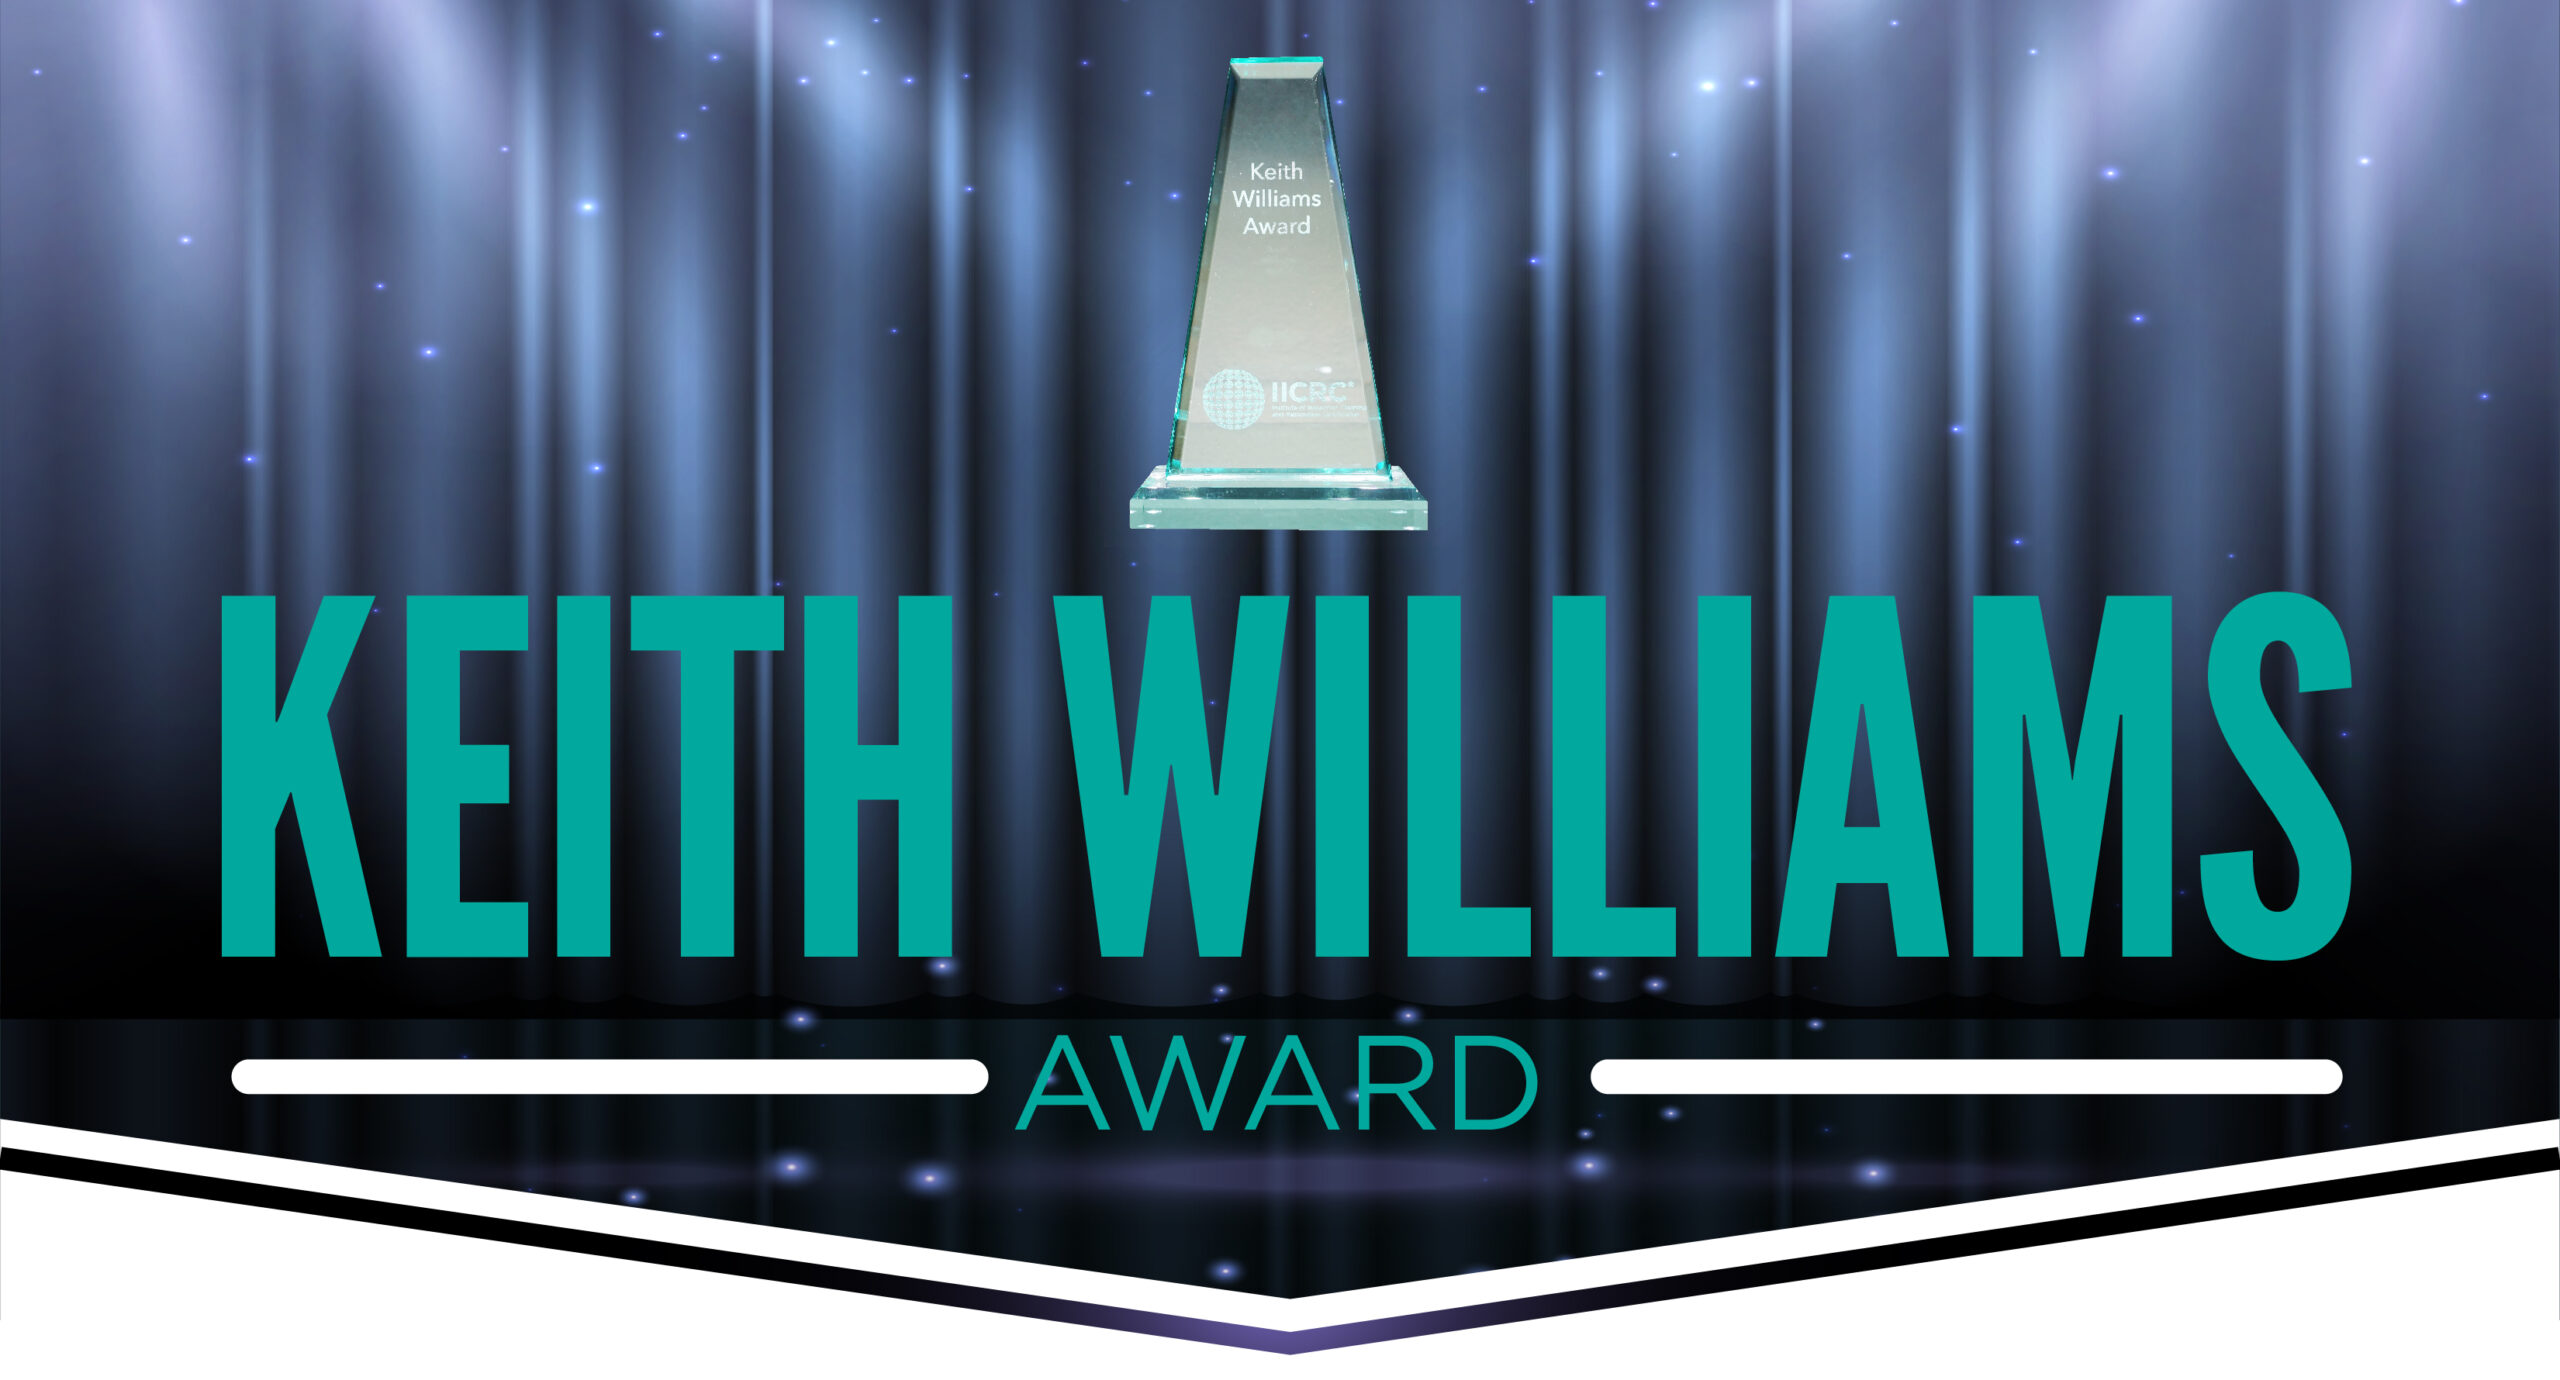 Keith Williams Award page header